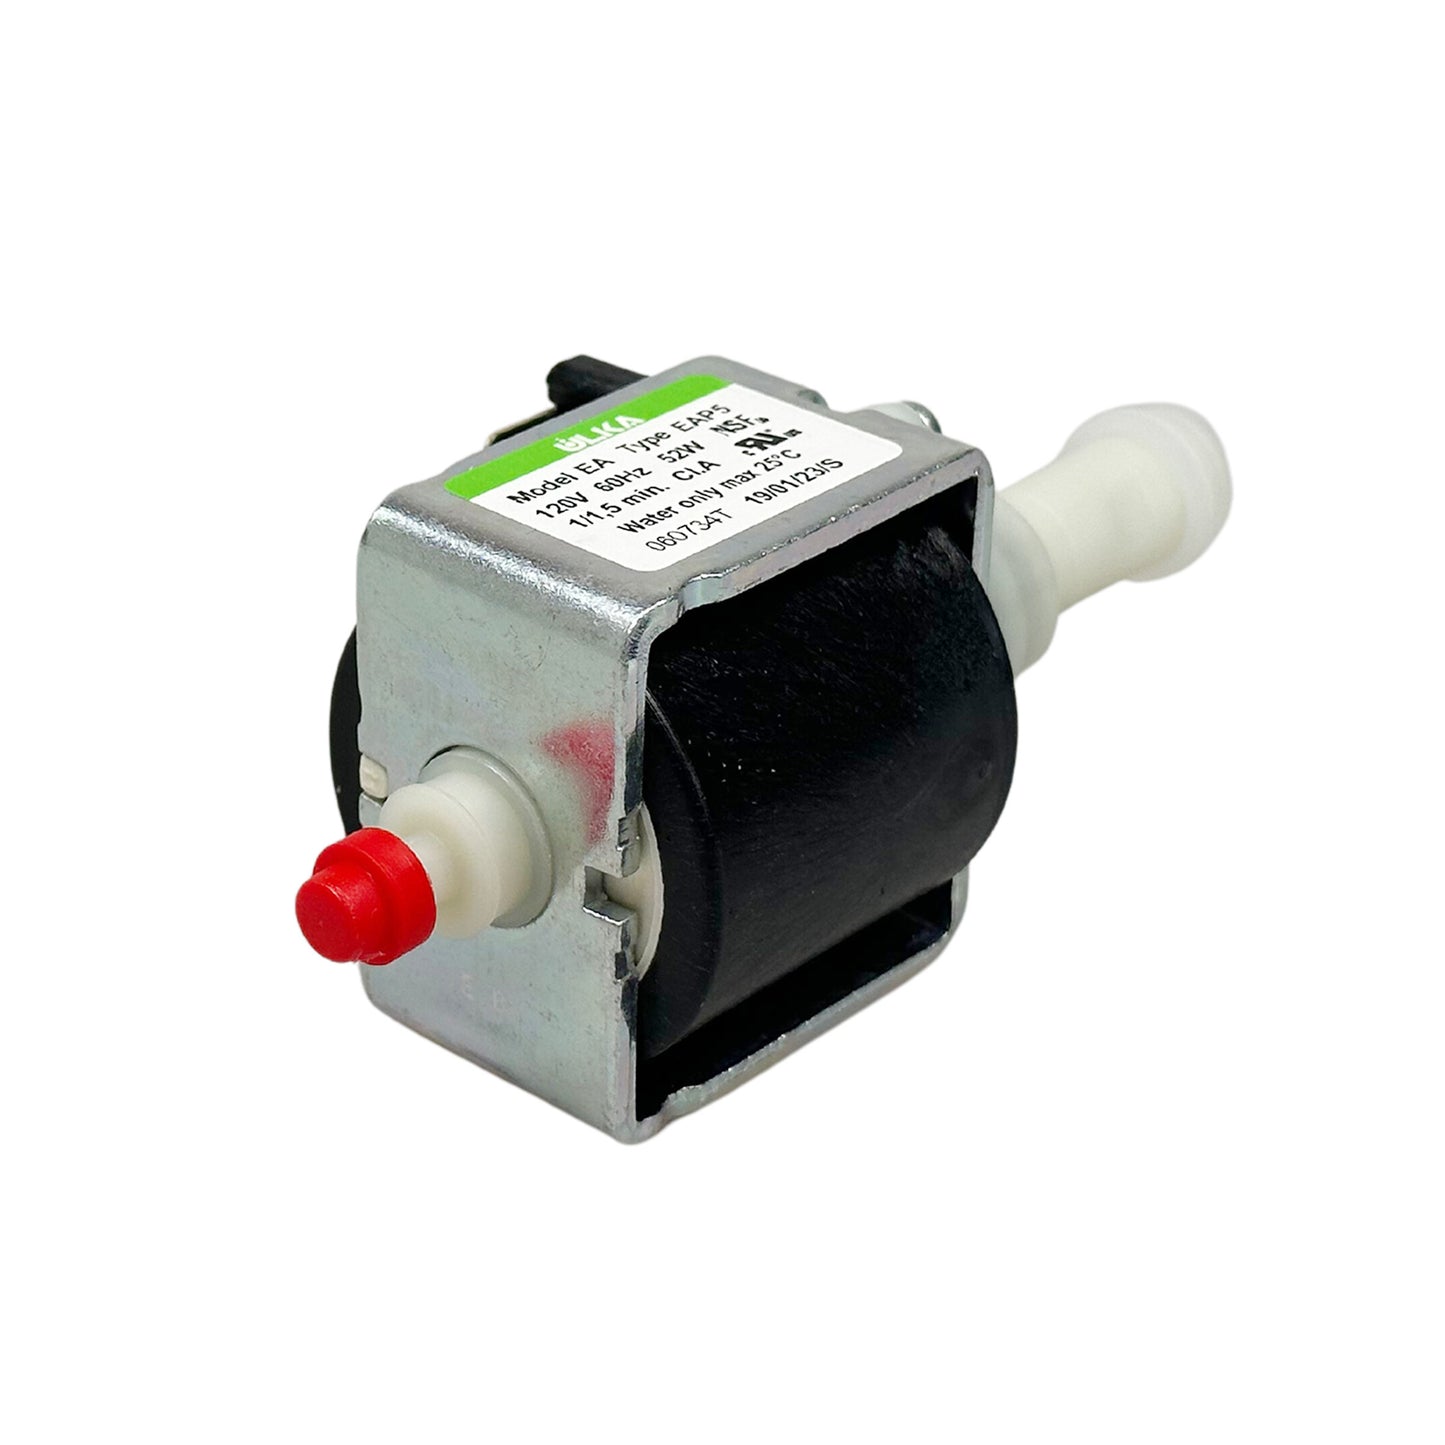 Ulka Vibration Pump EAP5/s - 120V, 60Hz, 52w NSF (Saeco 996530007754 Replacement)